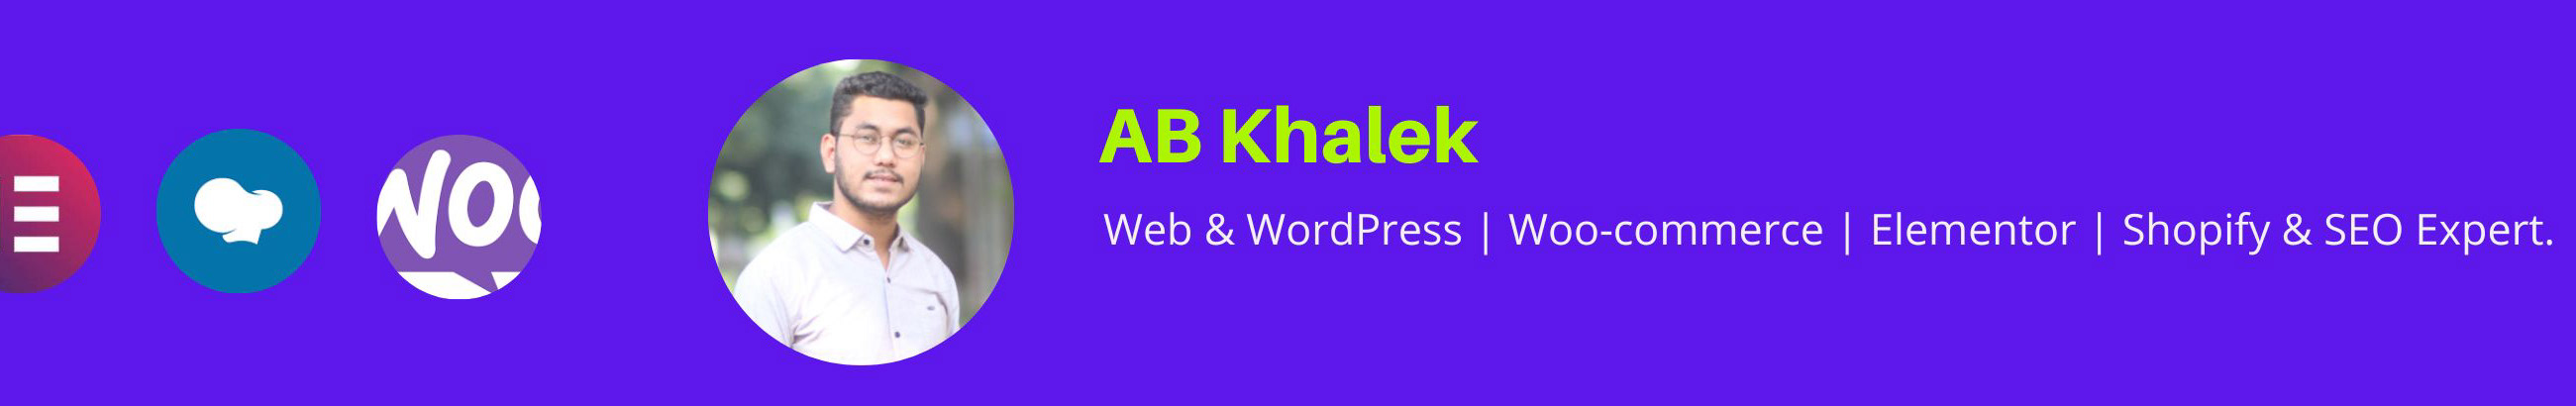 AB Khalek's profile banner